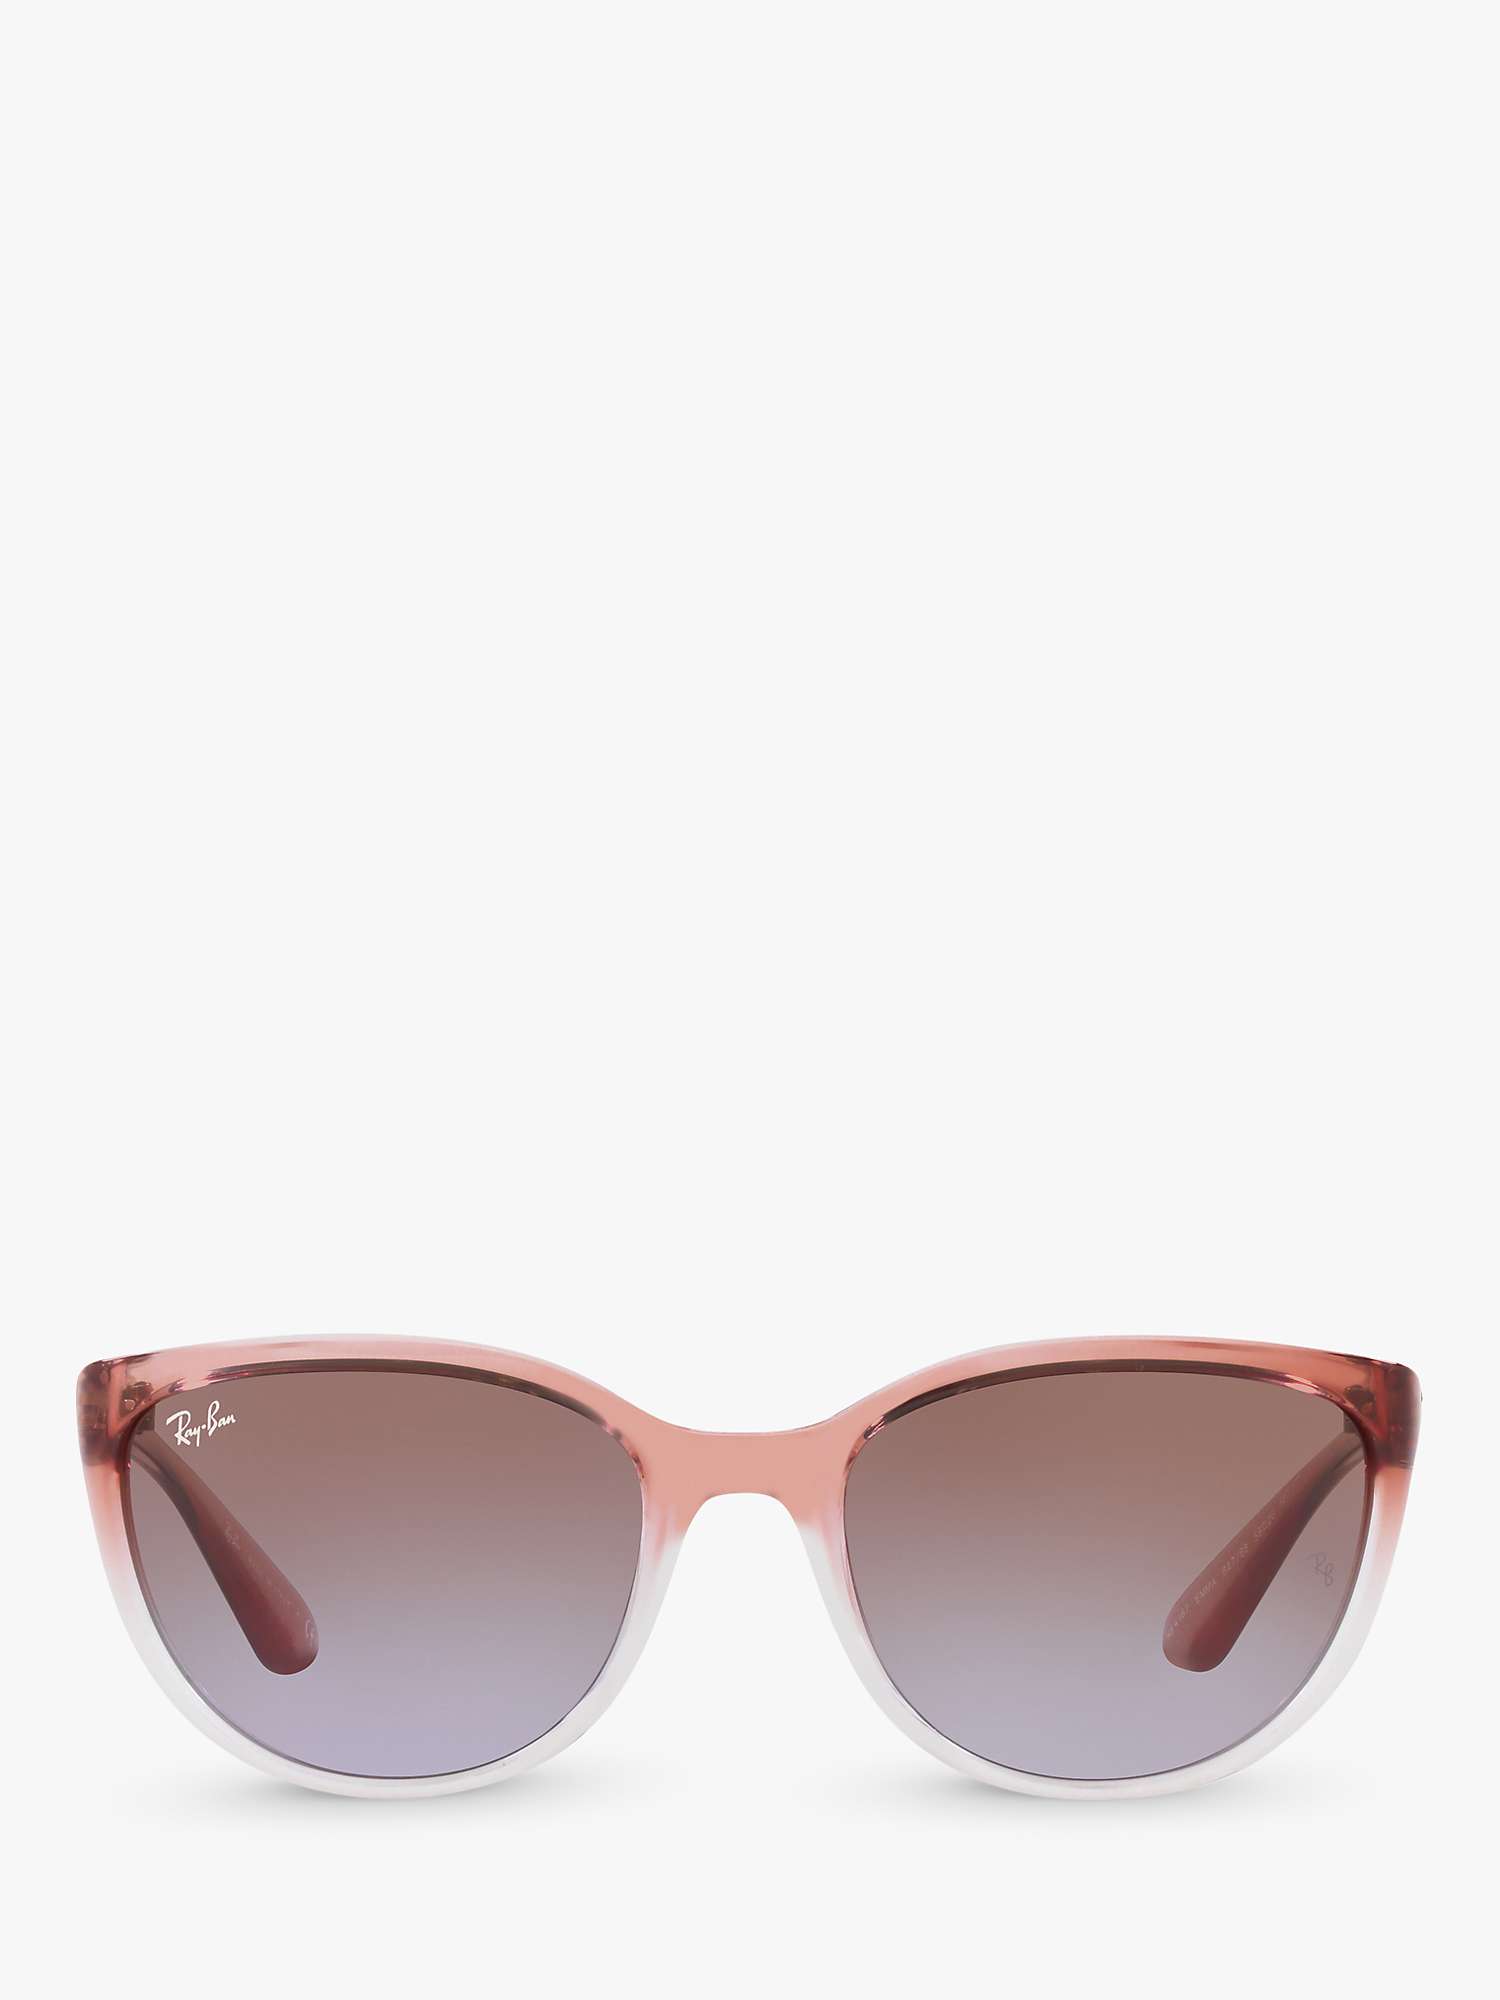 Buy Ray-Ban RB4167 59 Women's Emma Irregular Sunglasses Online at johnlewis.com